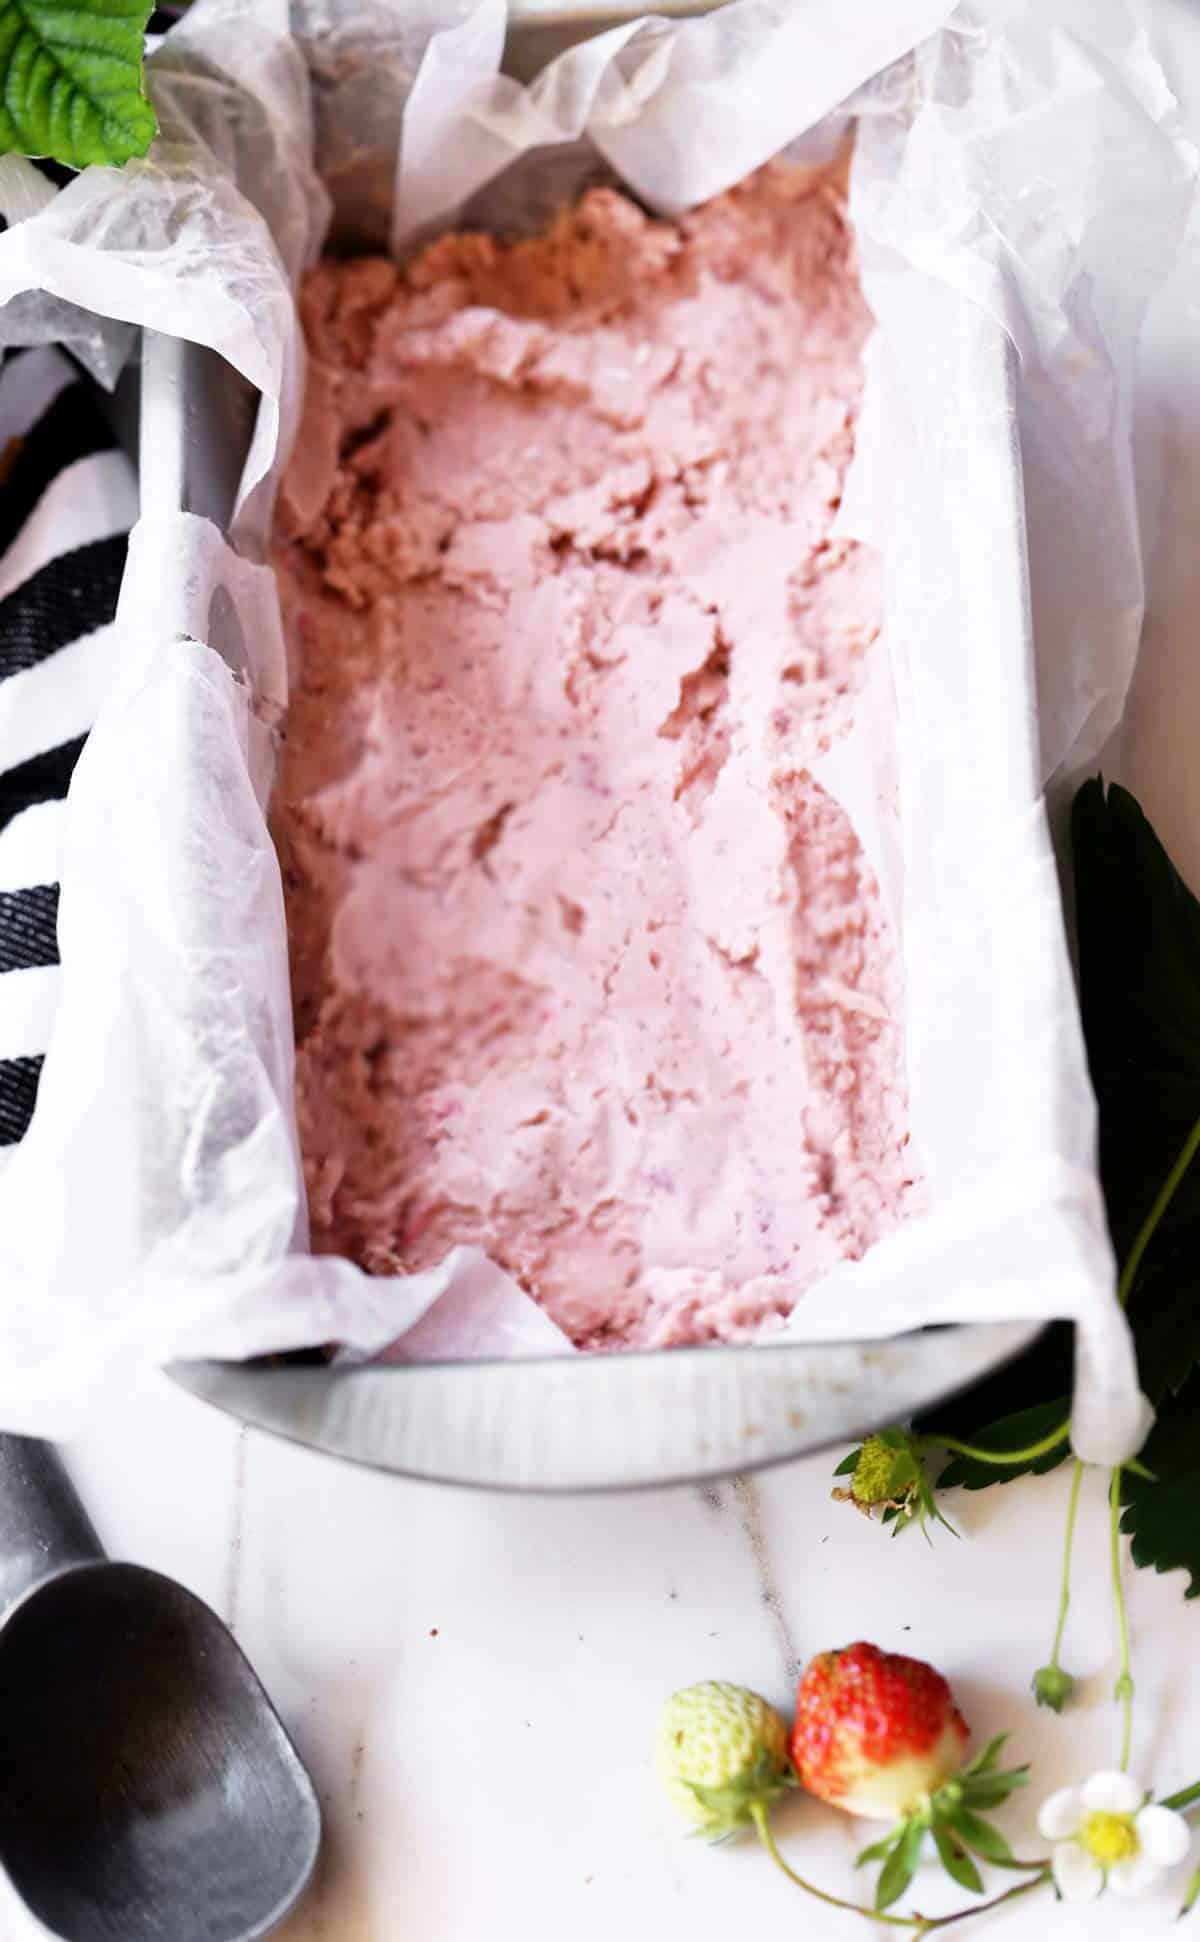 Strawberry Balsamic Almond Milk Ice Cream a delightful dairy free ice cream with almond milk custard and roasted balsamic strawberries. non dairy | homemade ice cream | dairy free dessert